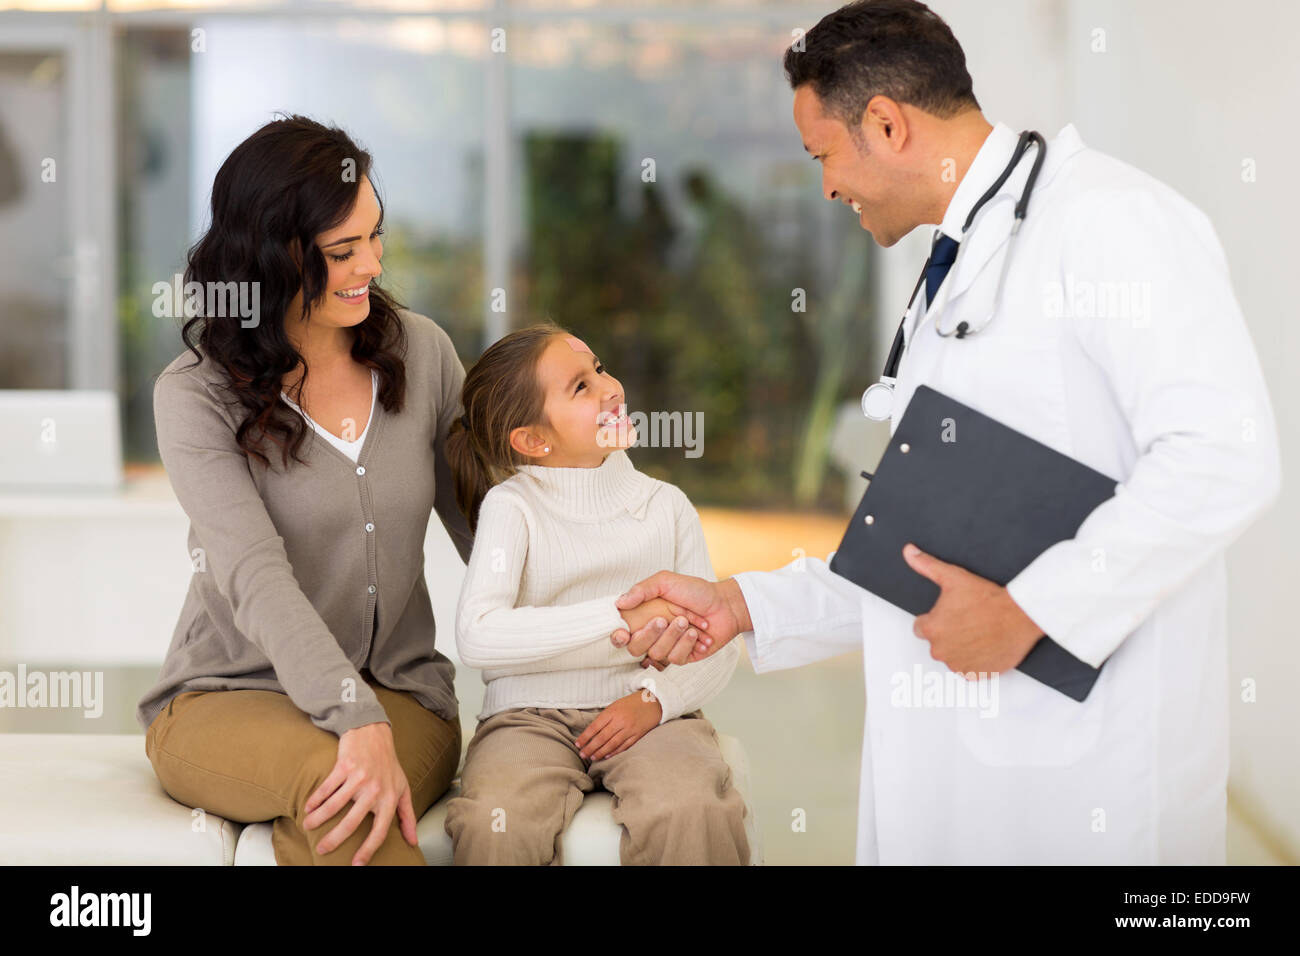 smiling pediatric doctor handshaking little patient Stock Photo